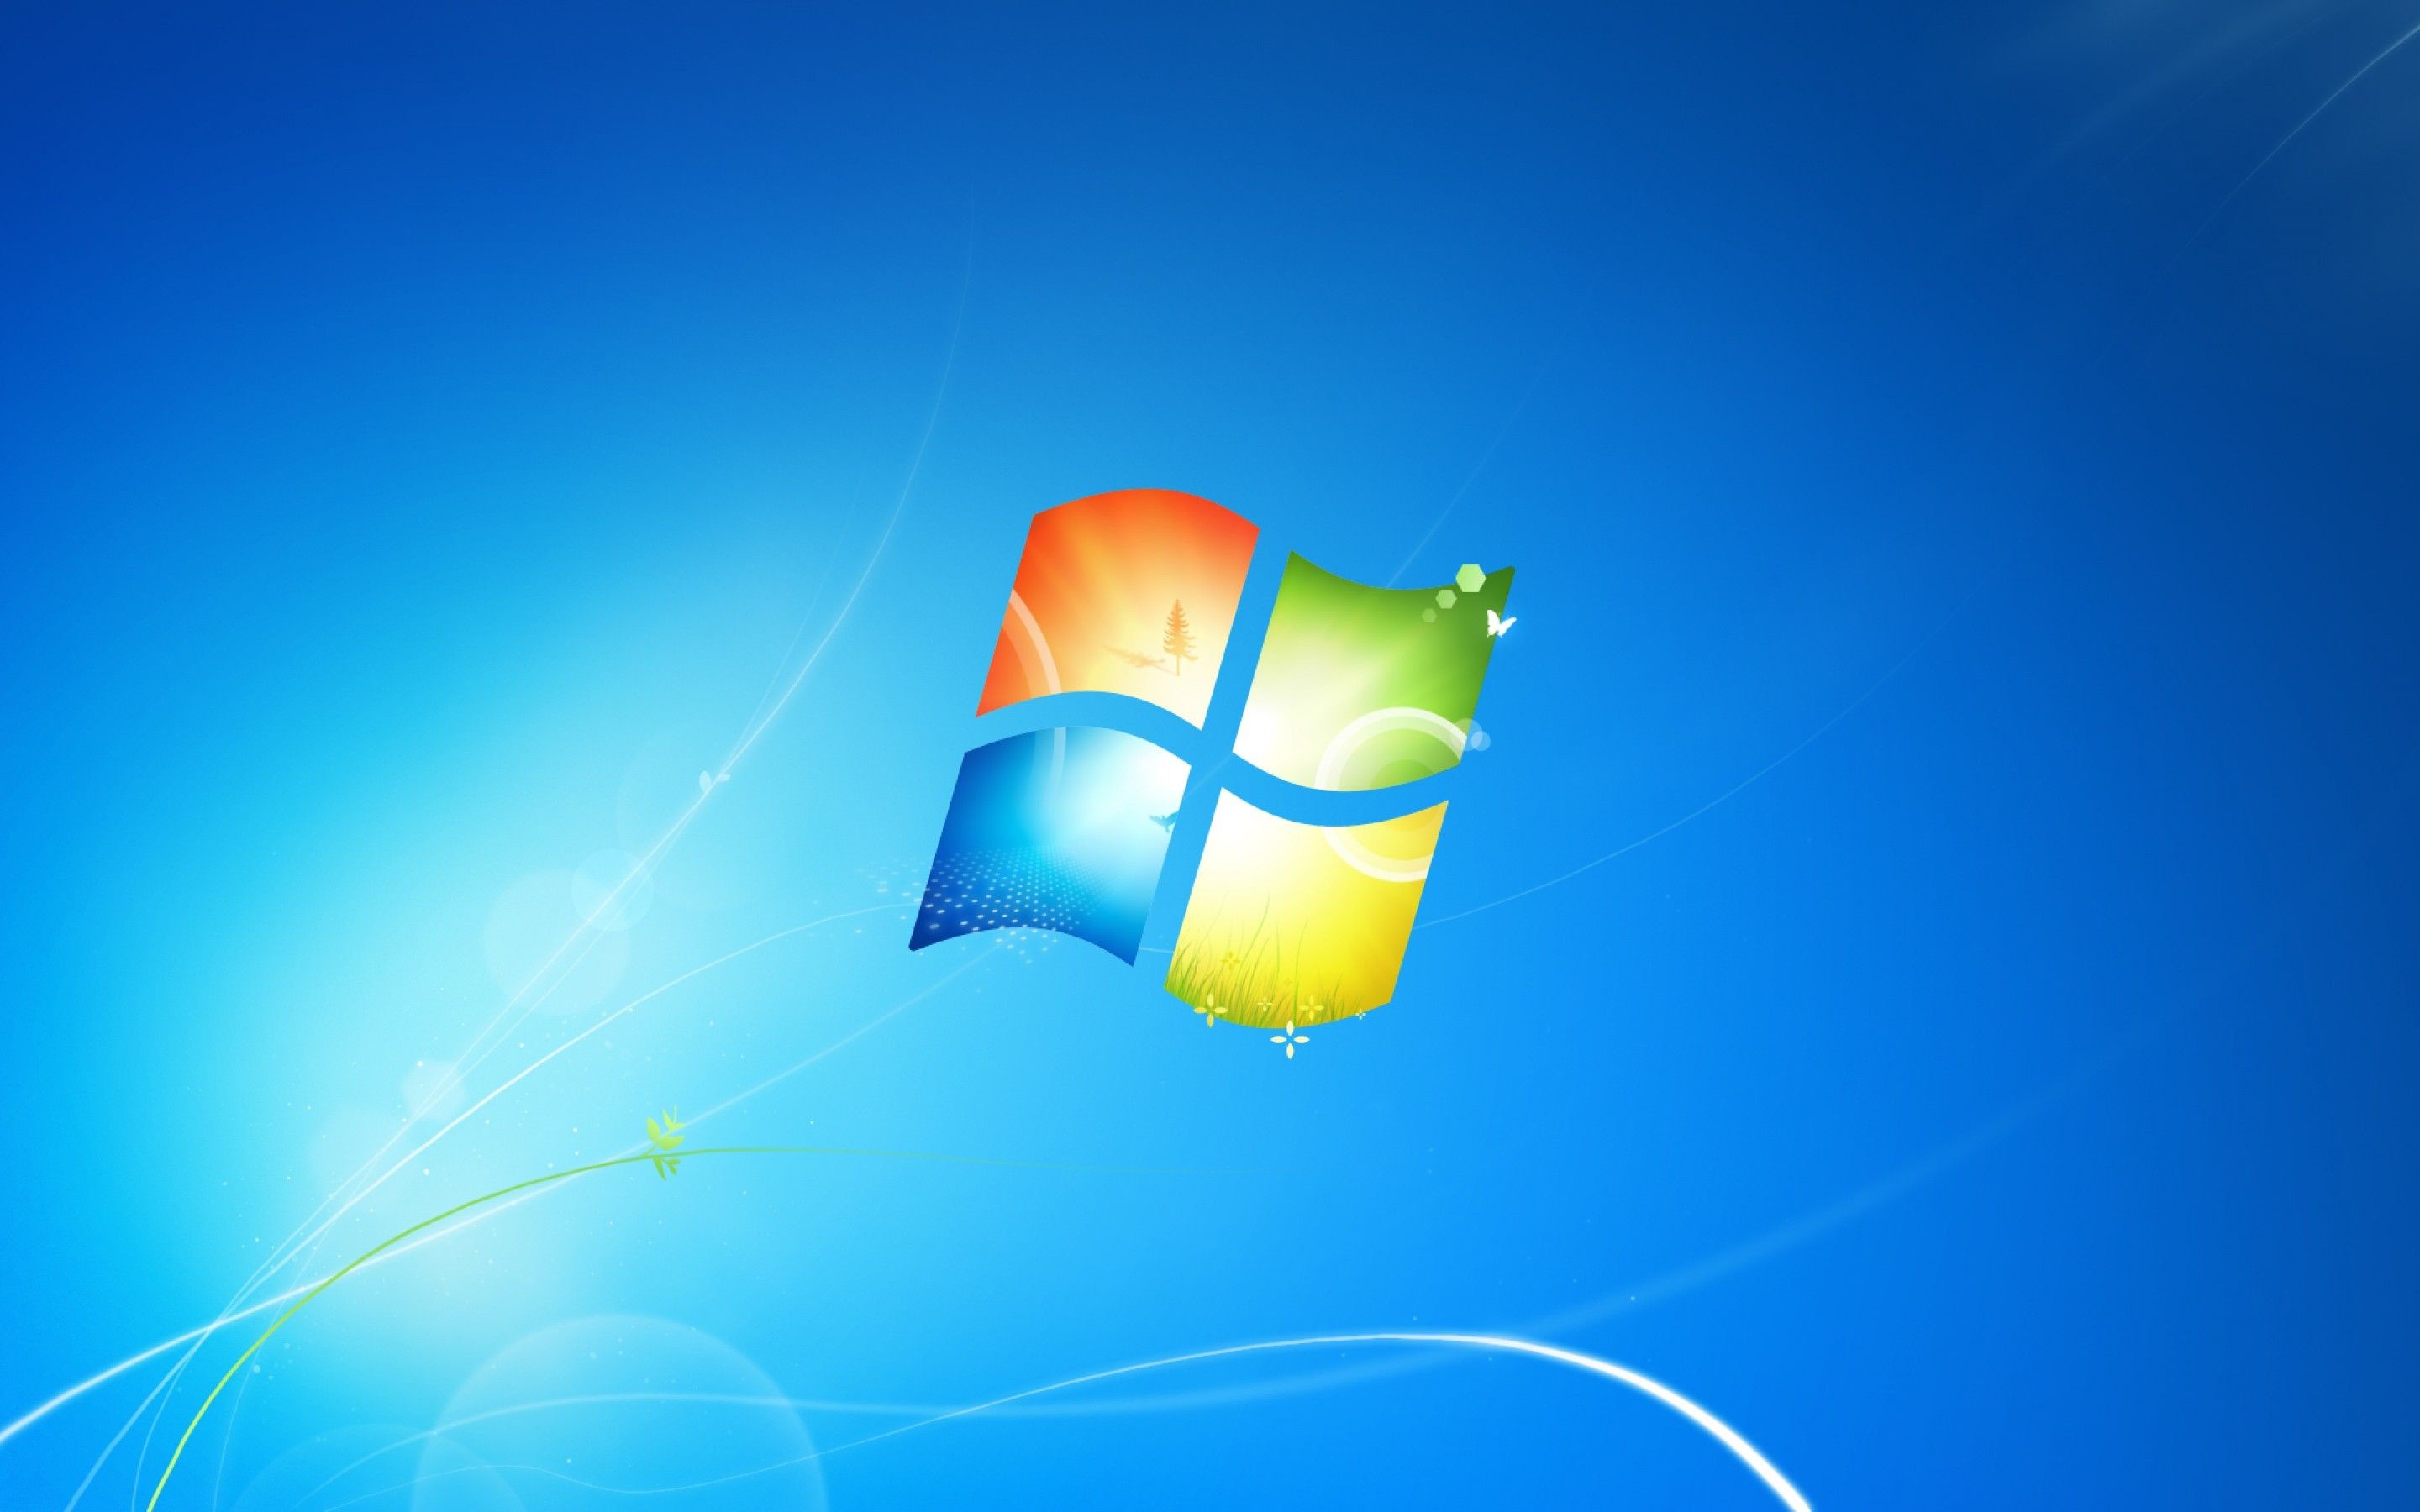 Microsoft Windows 7 Desktop Backgrounds 64 images